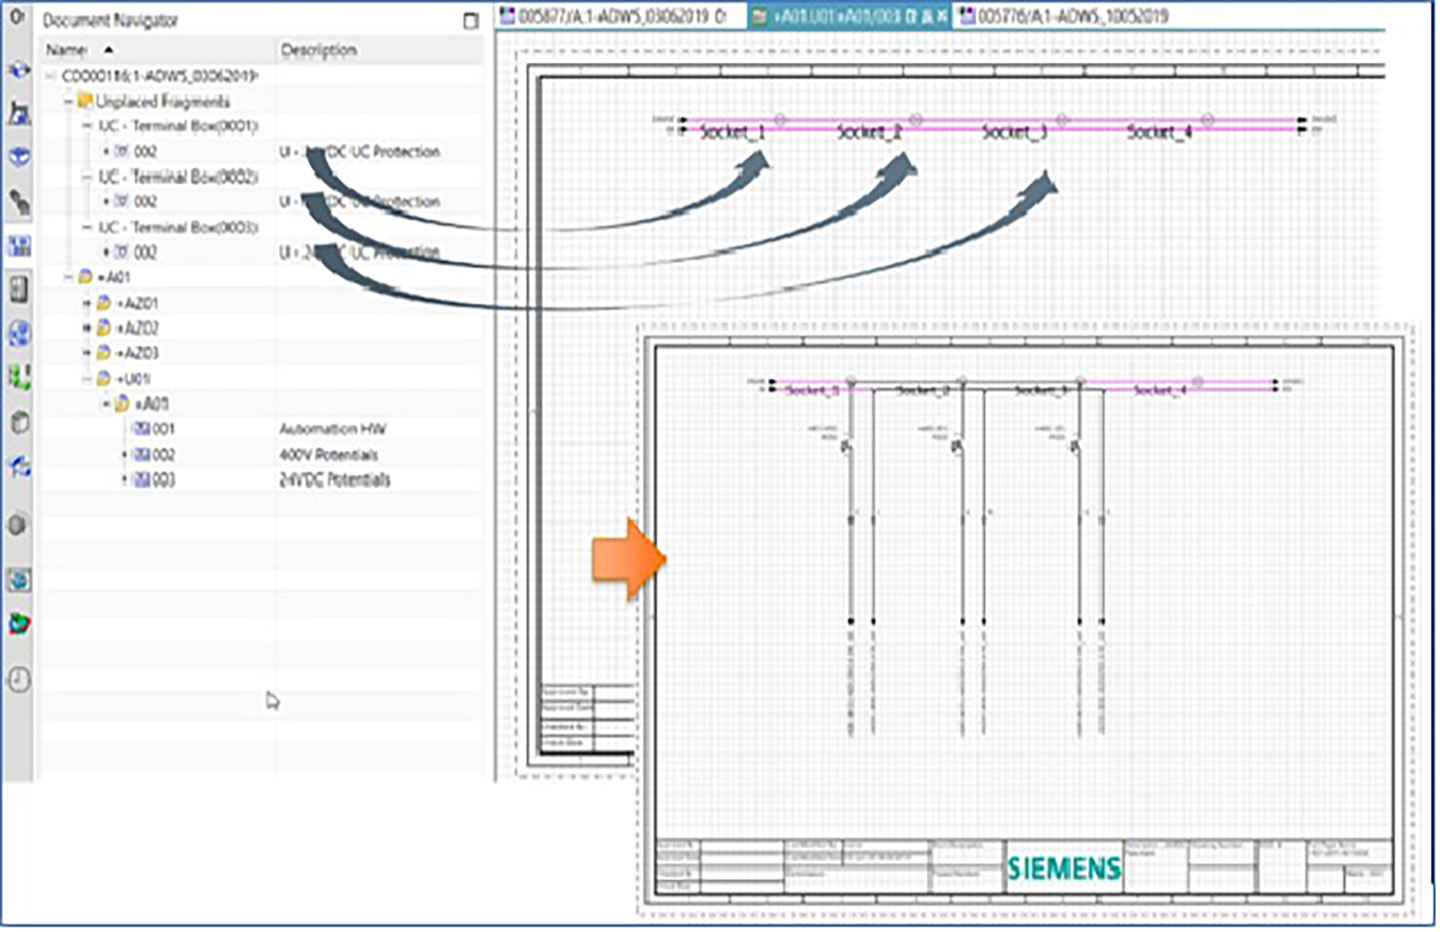 Siemens NX Industrial Electrical Design Tools Software